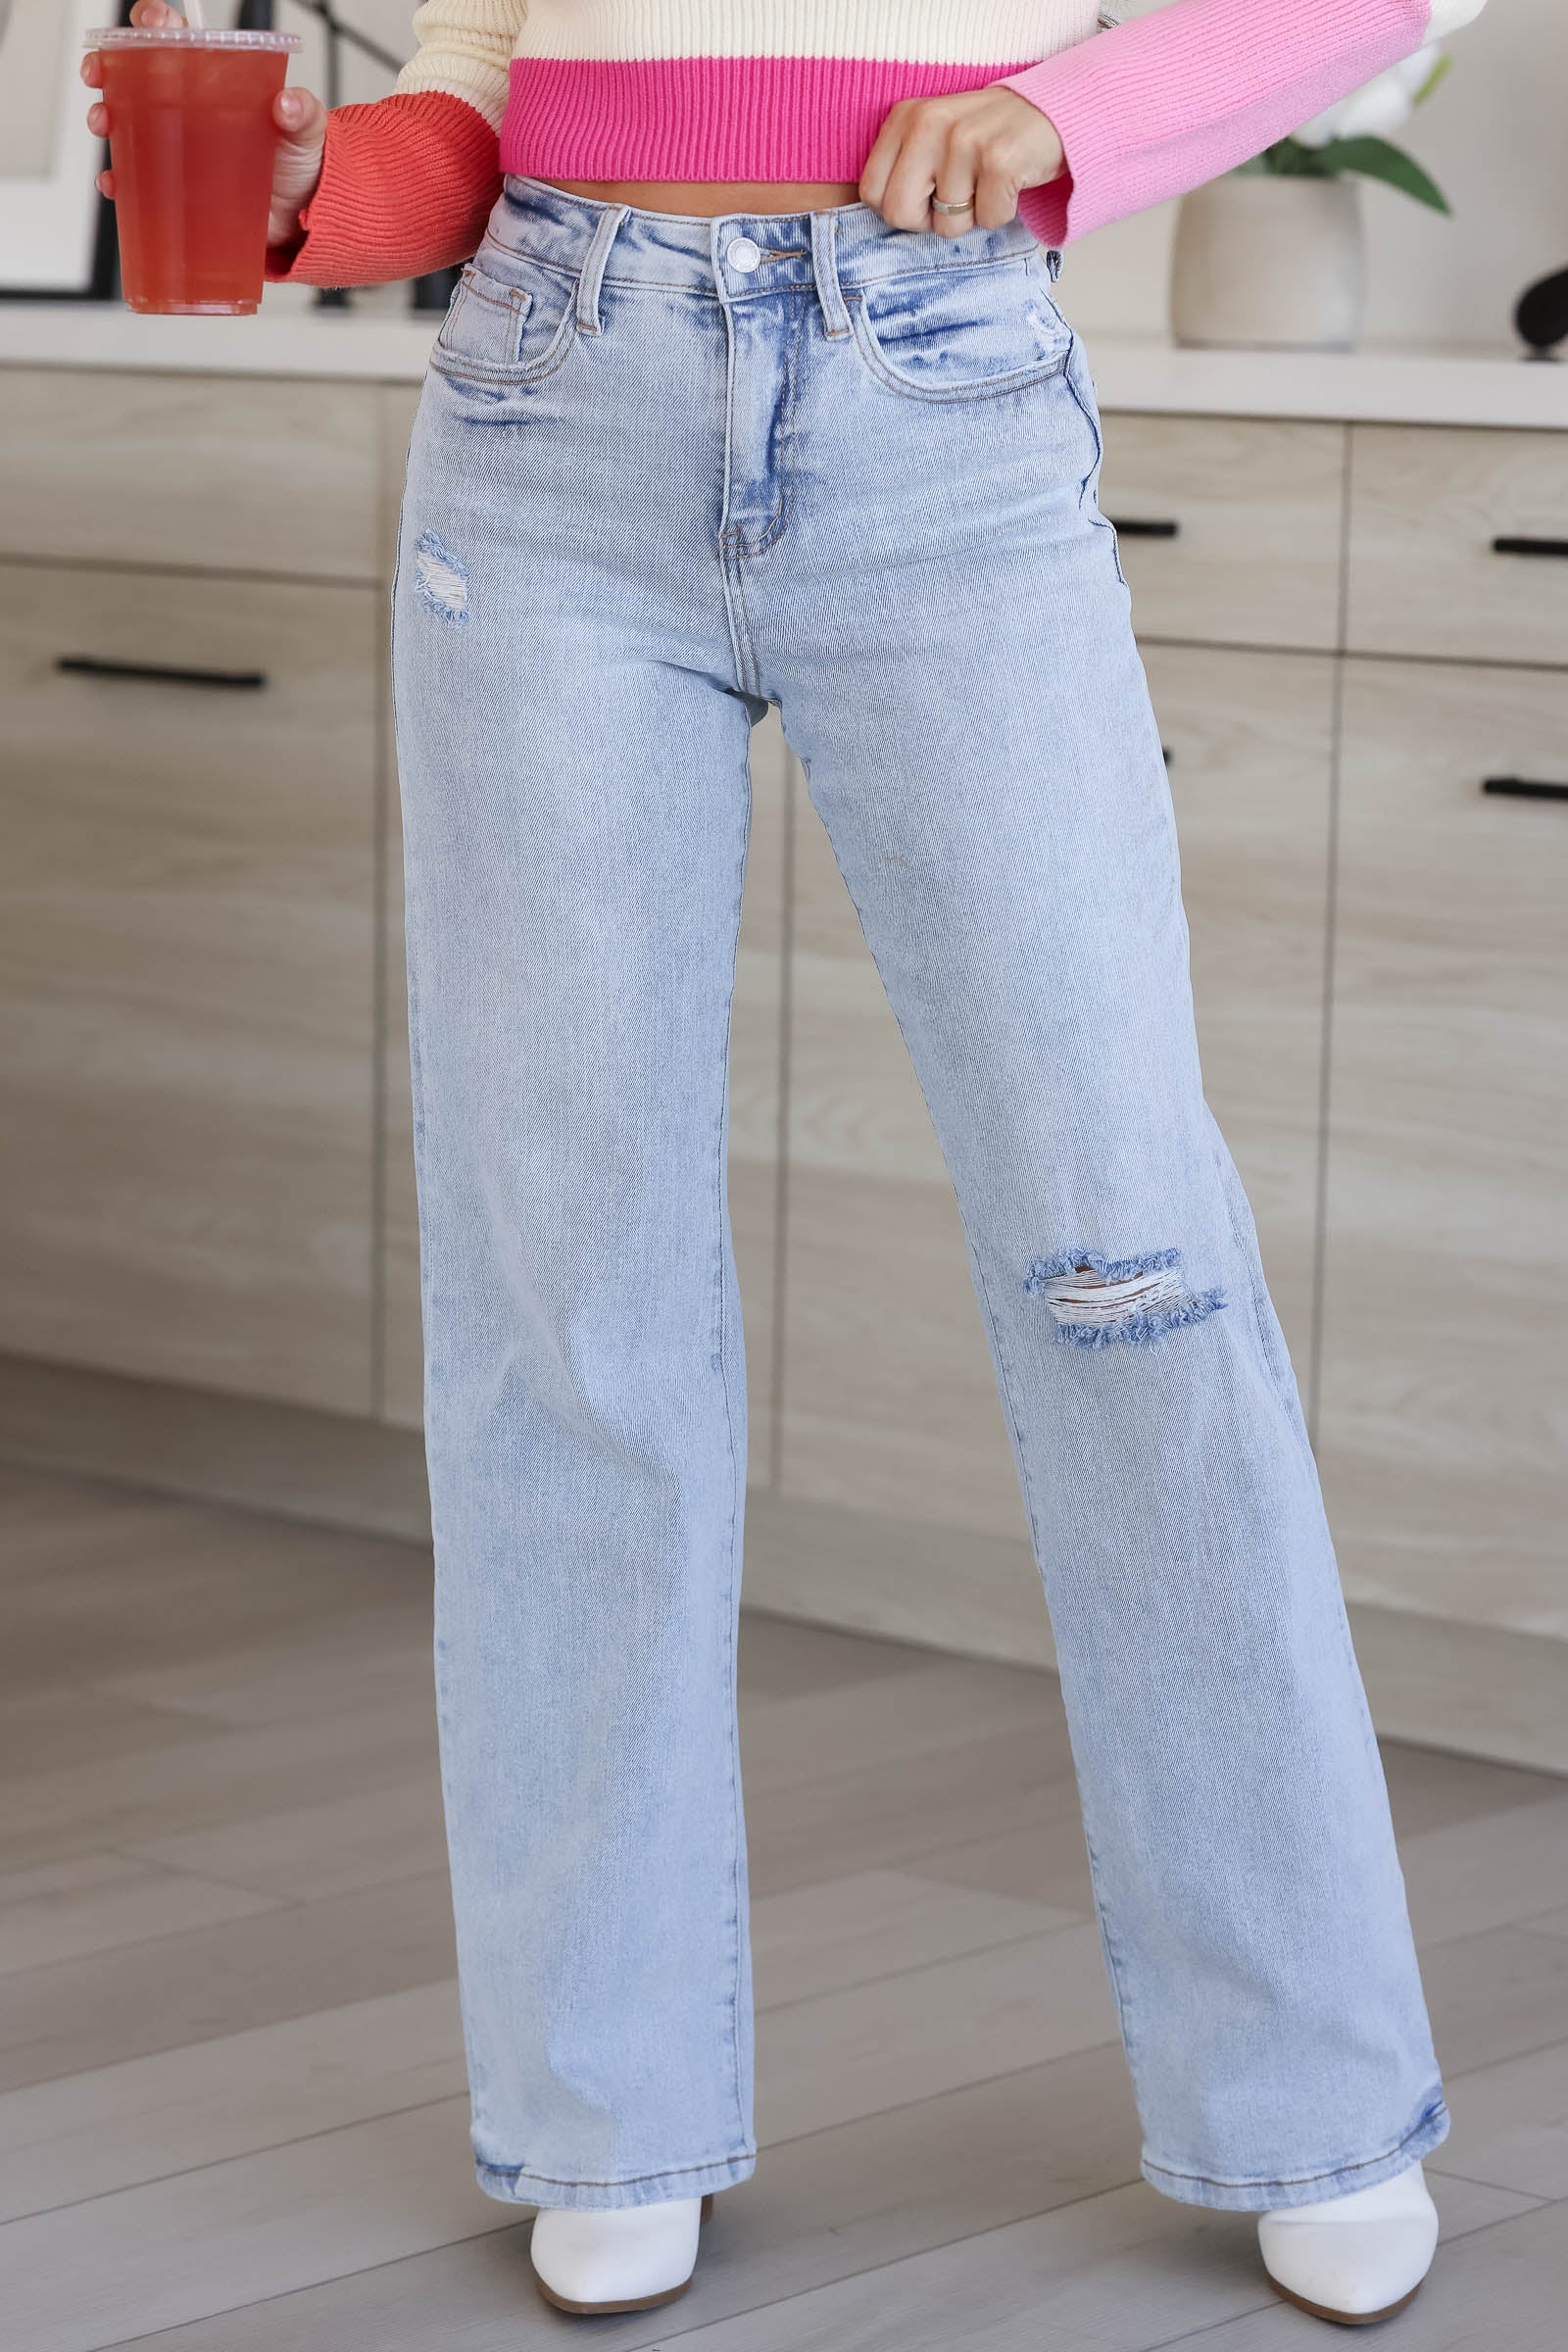 VERVET Mia 90's Vintage Super High-Rise Flare Jeans